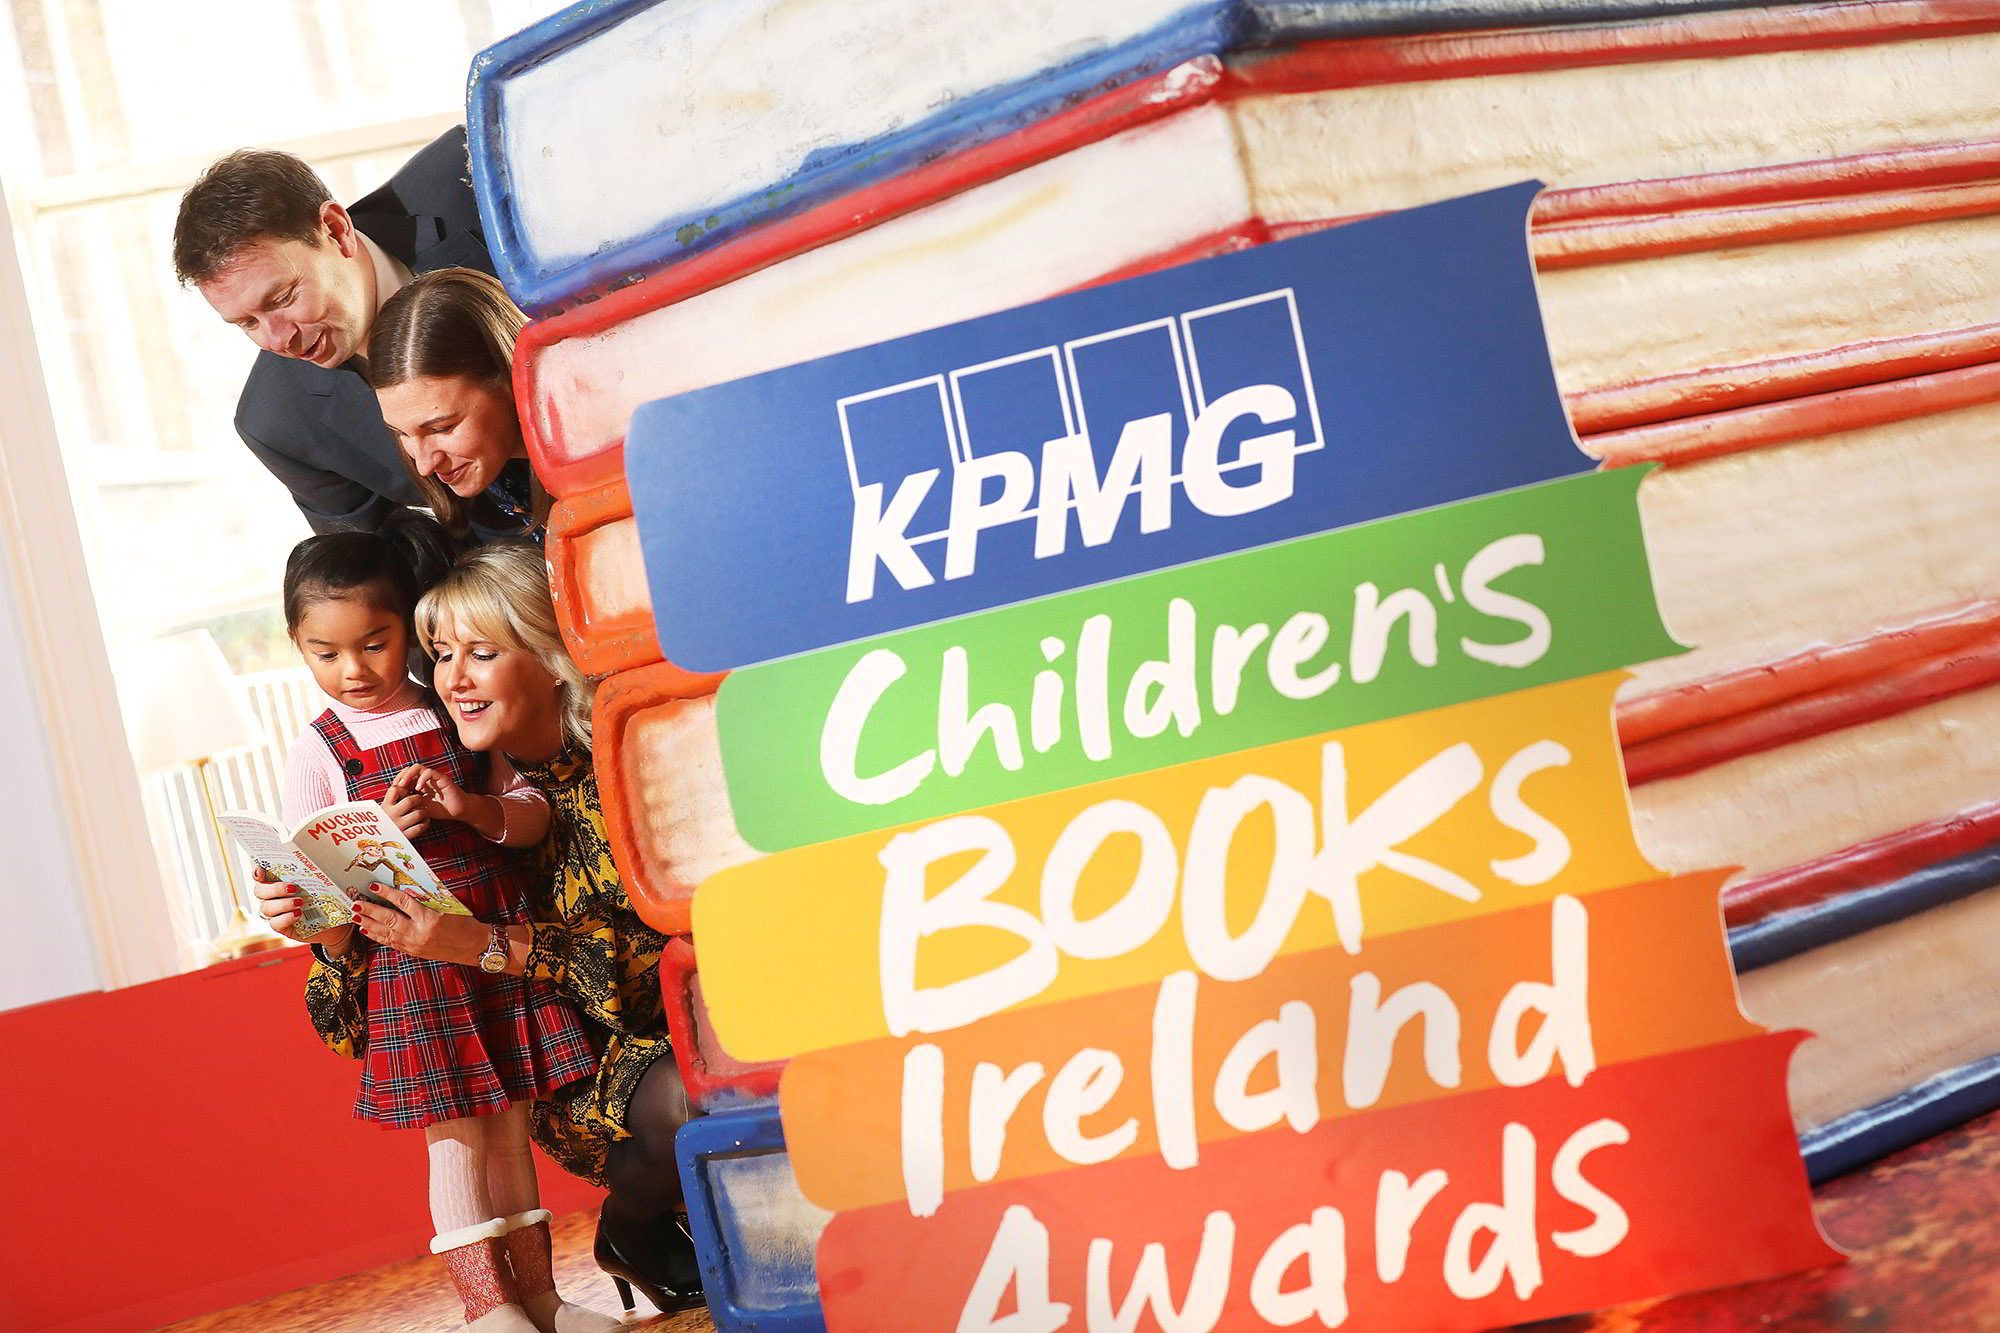 KPMG Children's Books Ireland Awards